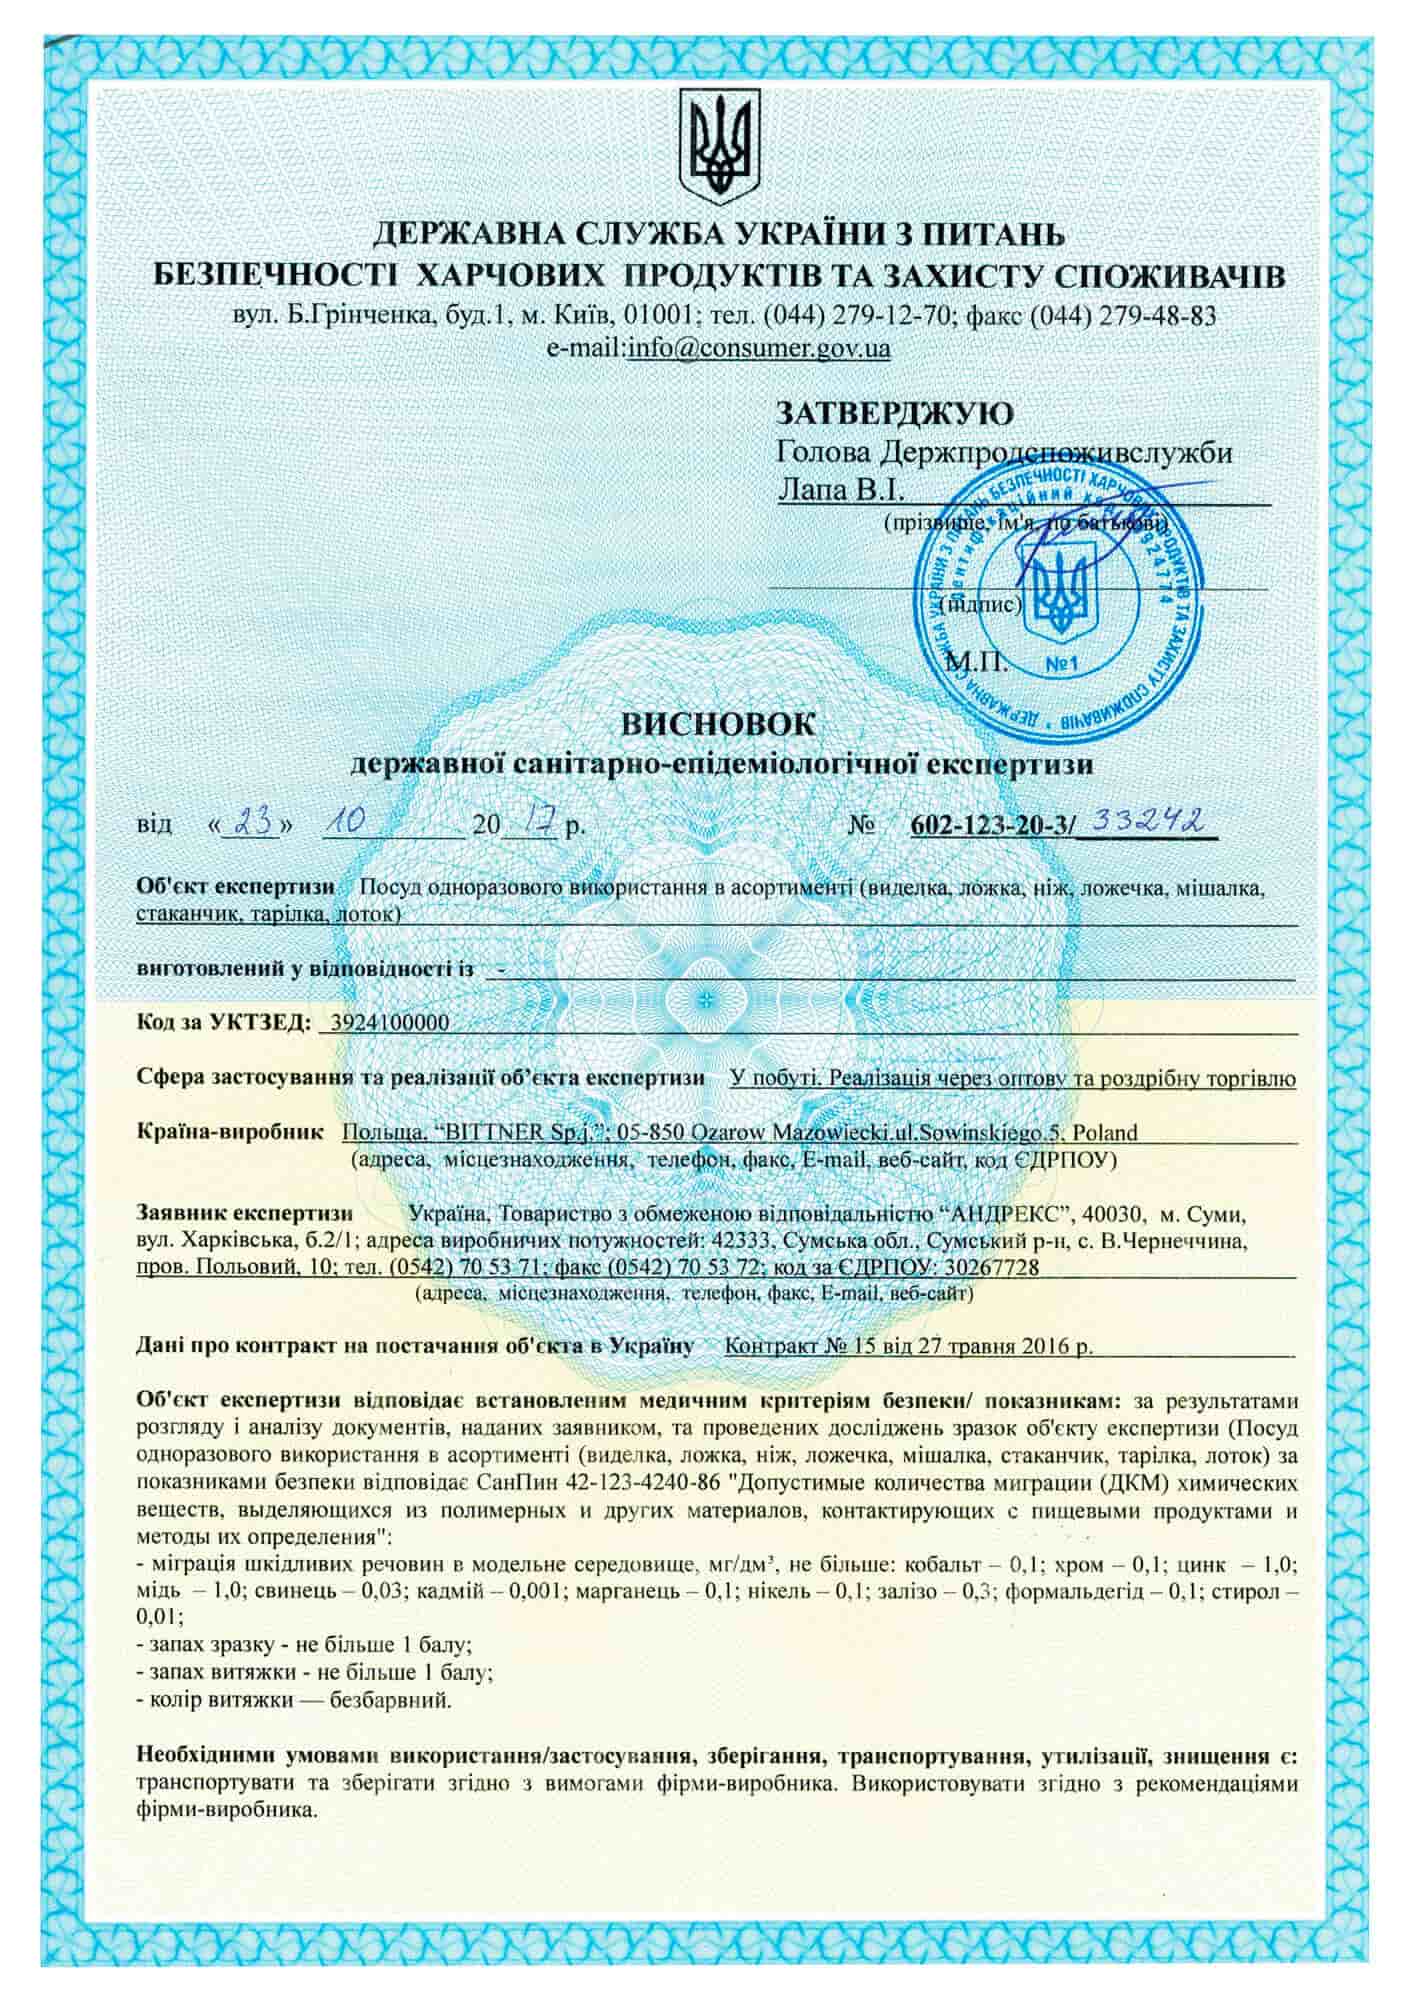 Сертификат на Bittner